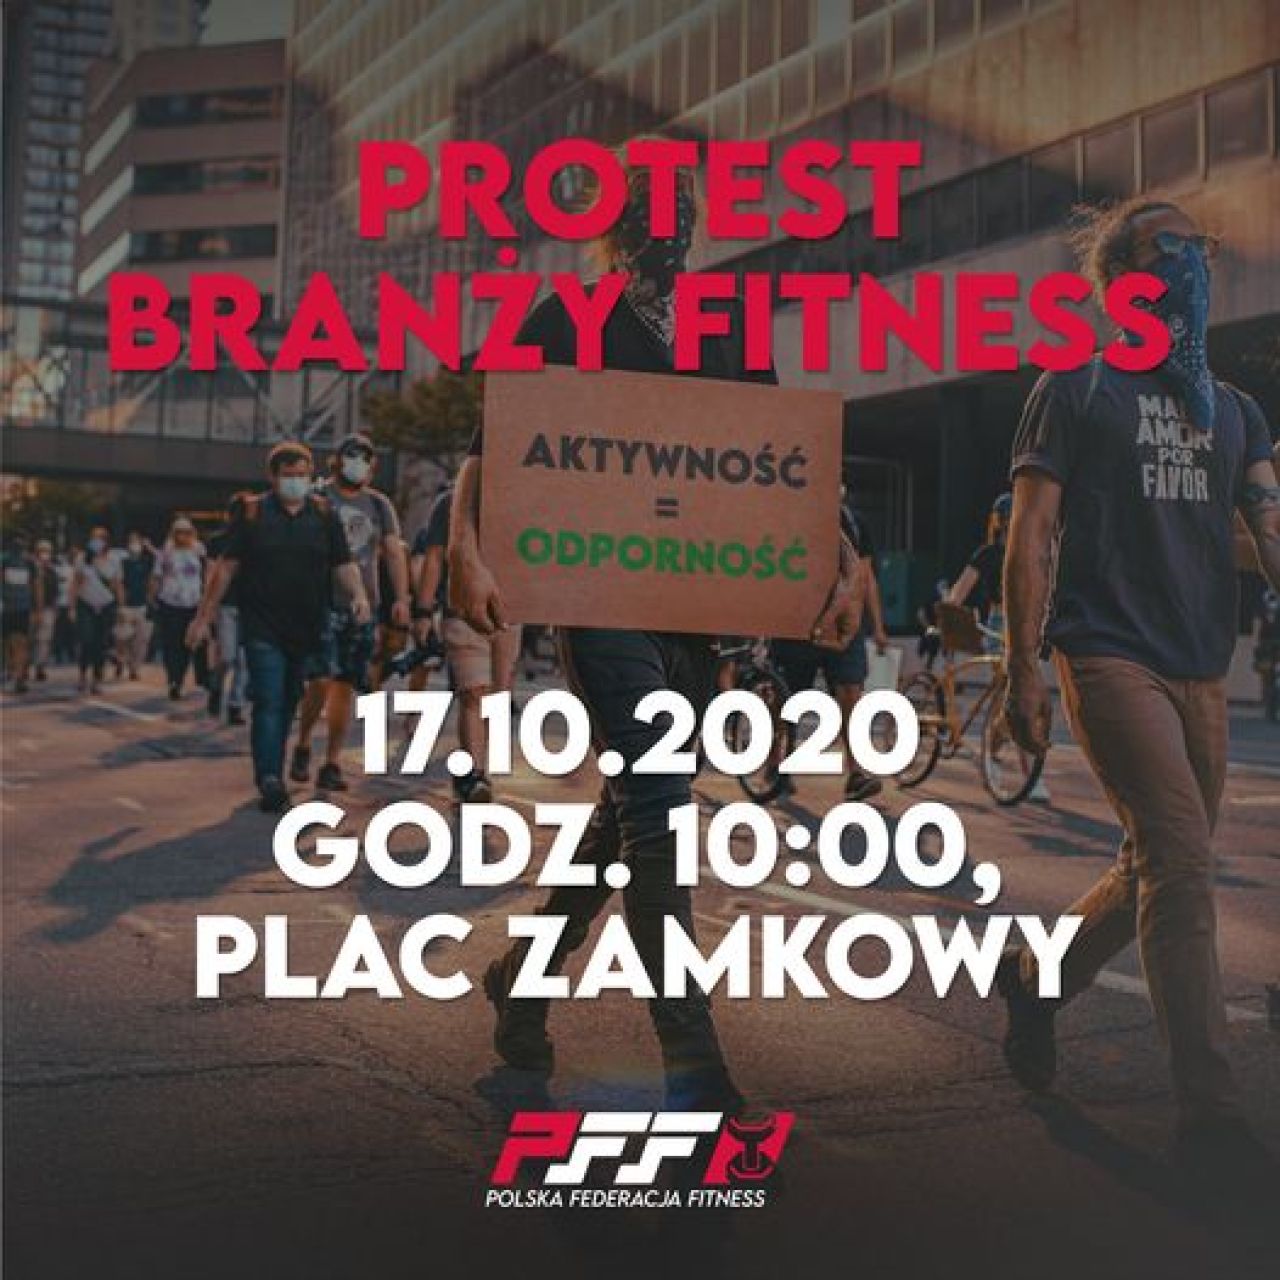 Polska Federacja Fitness grozi protestem!